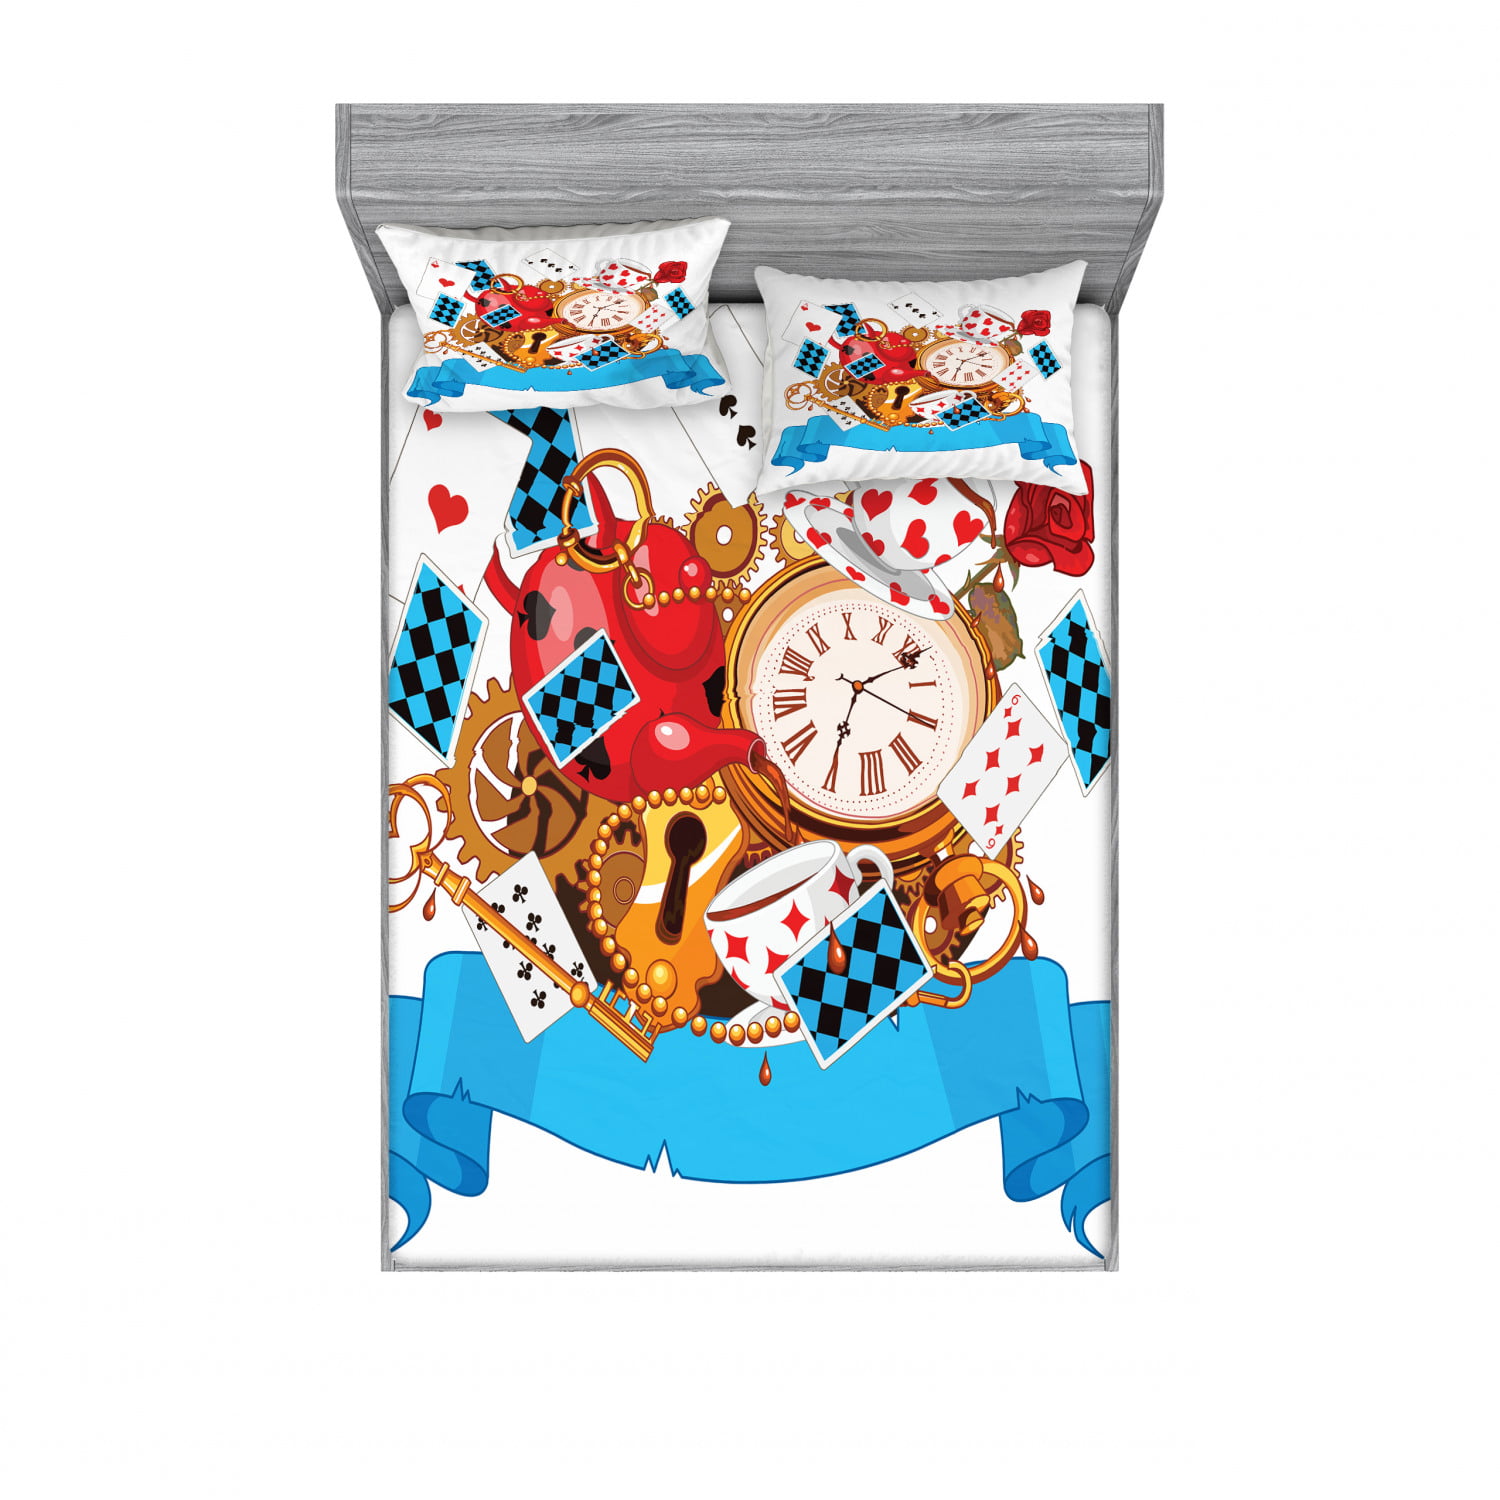 Mad Design of Cards Clocks Tea Pots Keys Flowers Fantasy World Artwork Ambesonne Alice in Wonderland Duvet Cover Set King Size Multicolor Decorative 3 Piece Bedding Set with 2 Pillow Shams